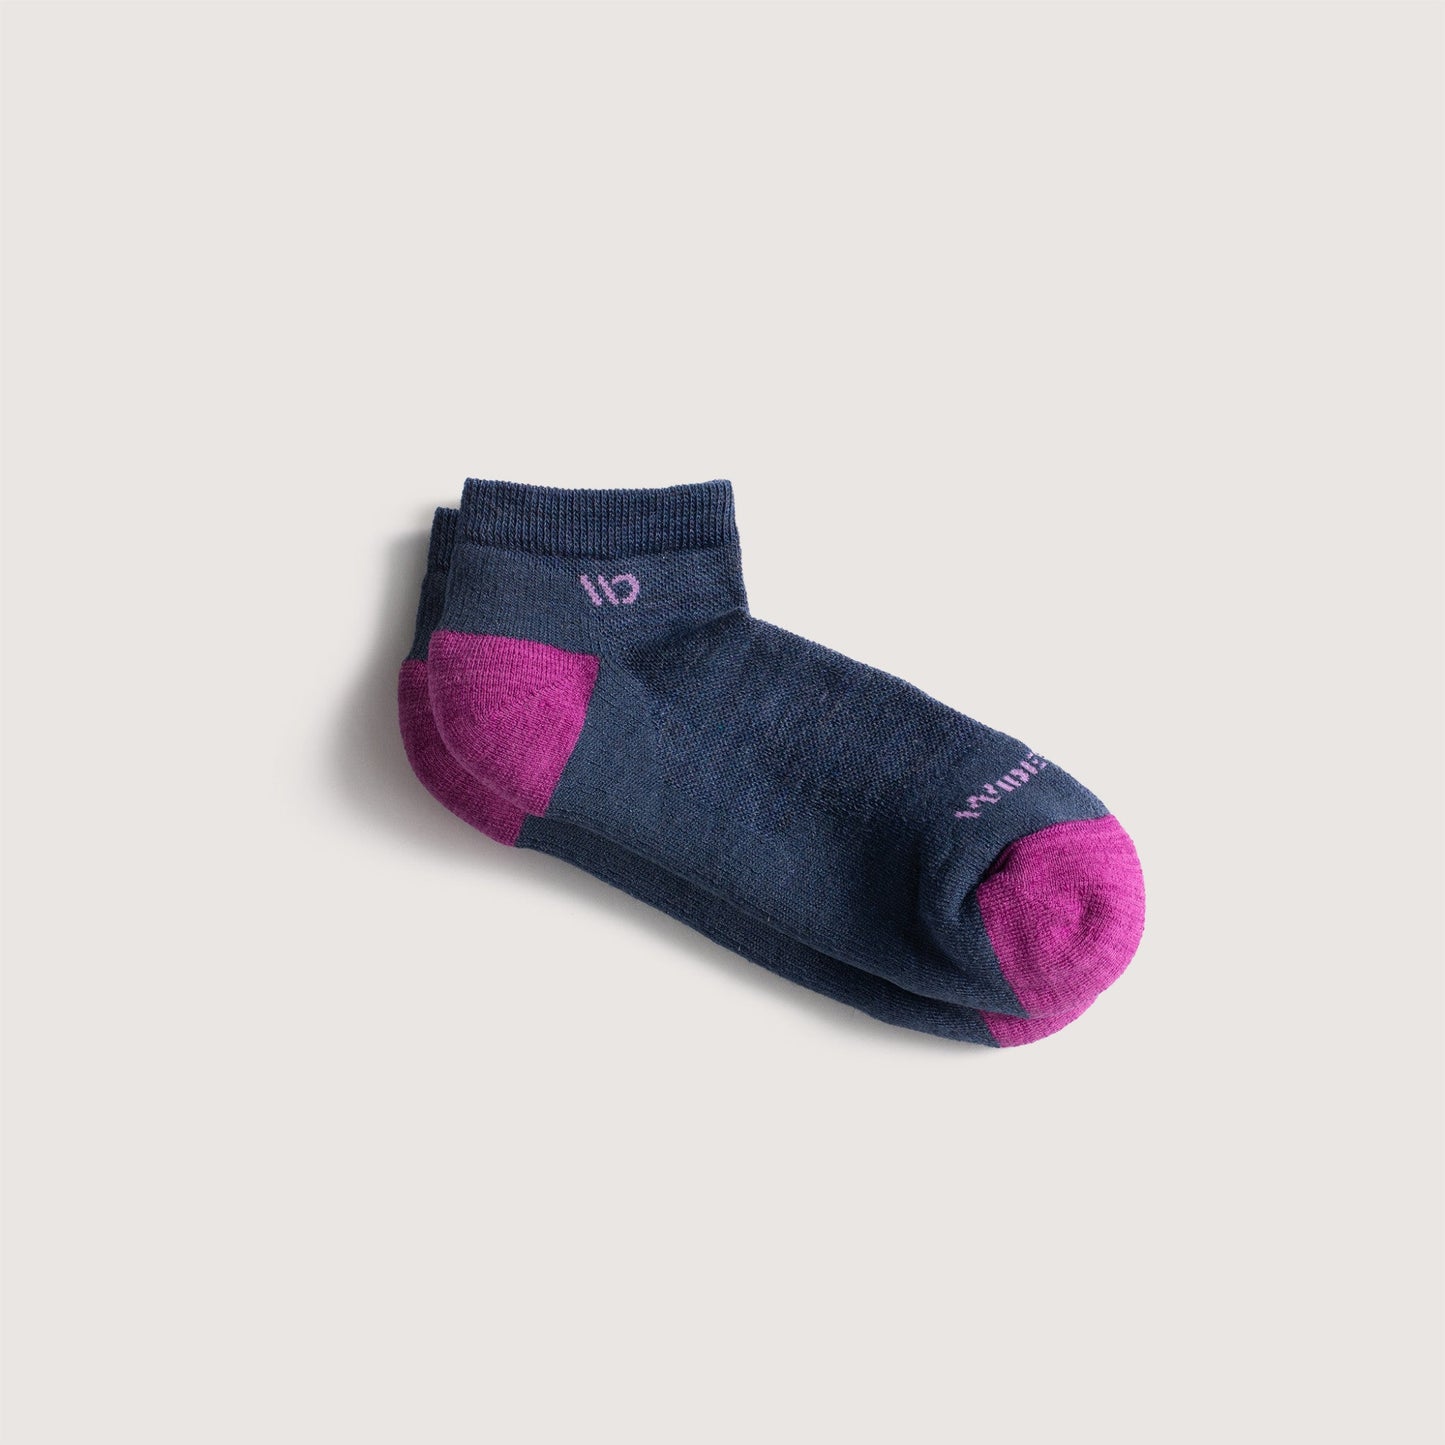 Flat socks featuring fuschia heel/toe, lavender logo, and denim body --Light Teal/Denim/Taupe